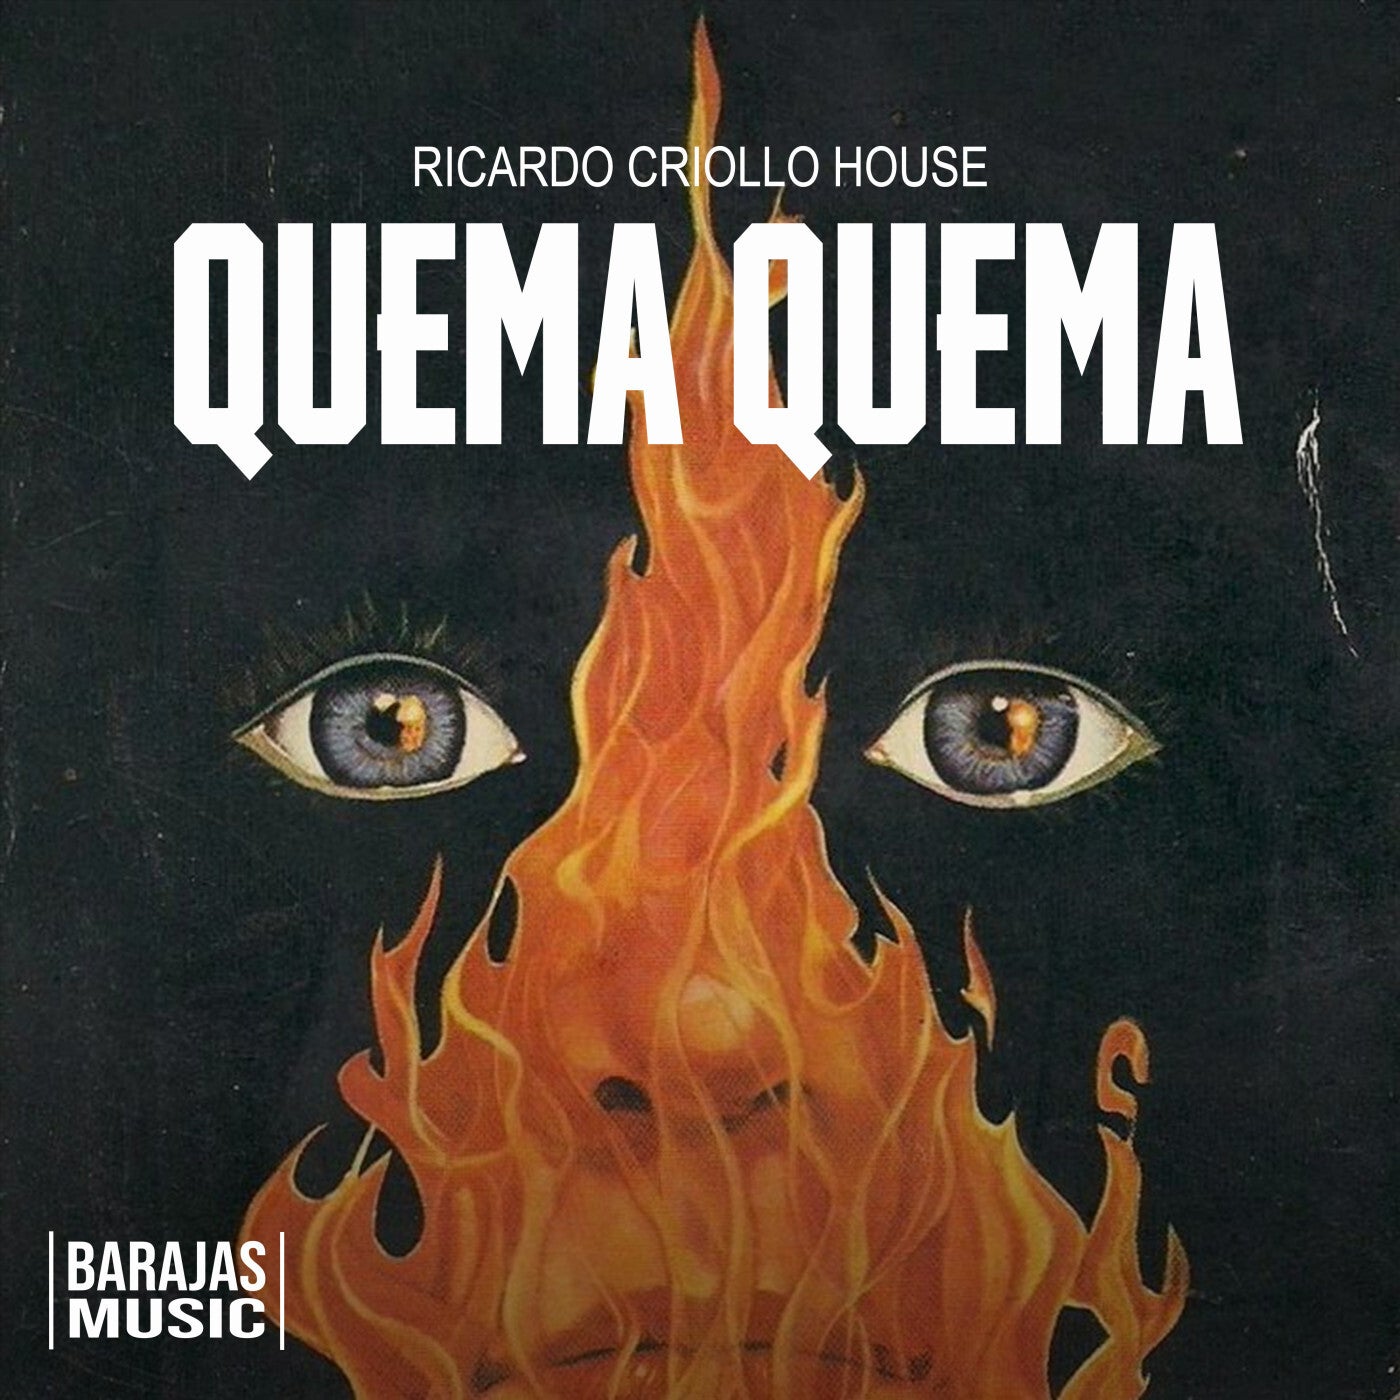 image cover: Ricardo Criollo House - Quema Quema on Barajas Music